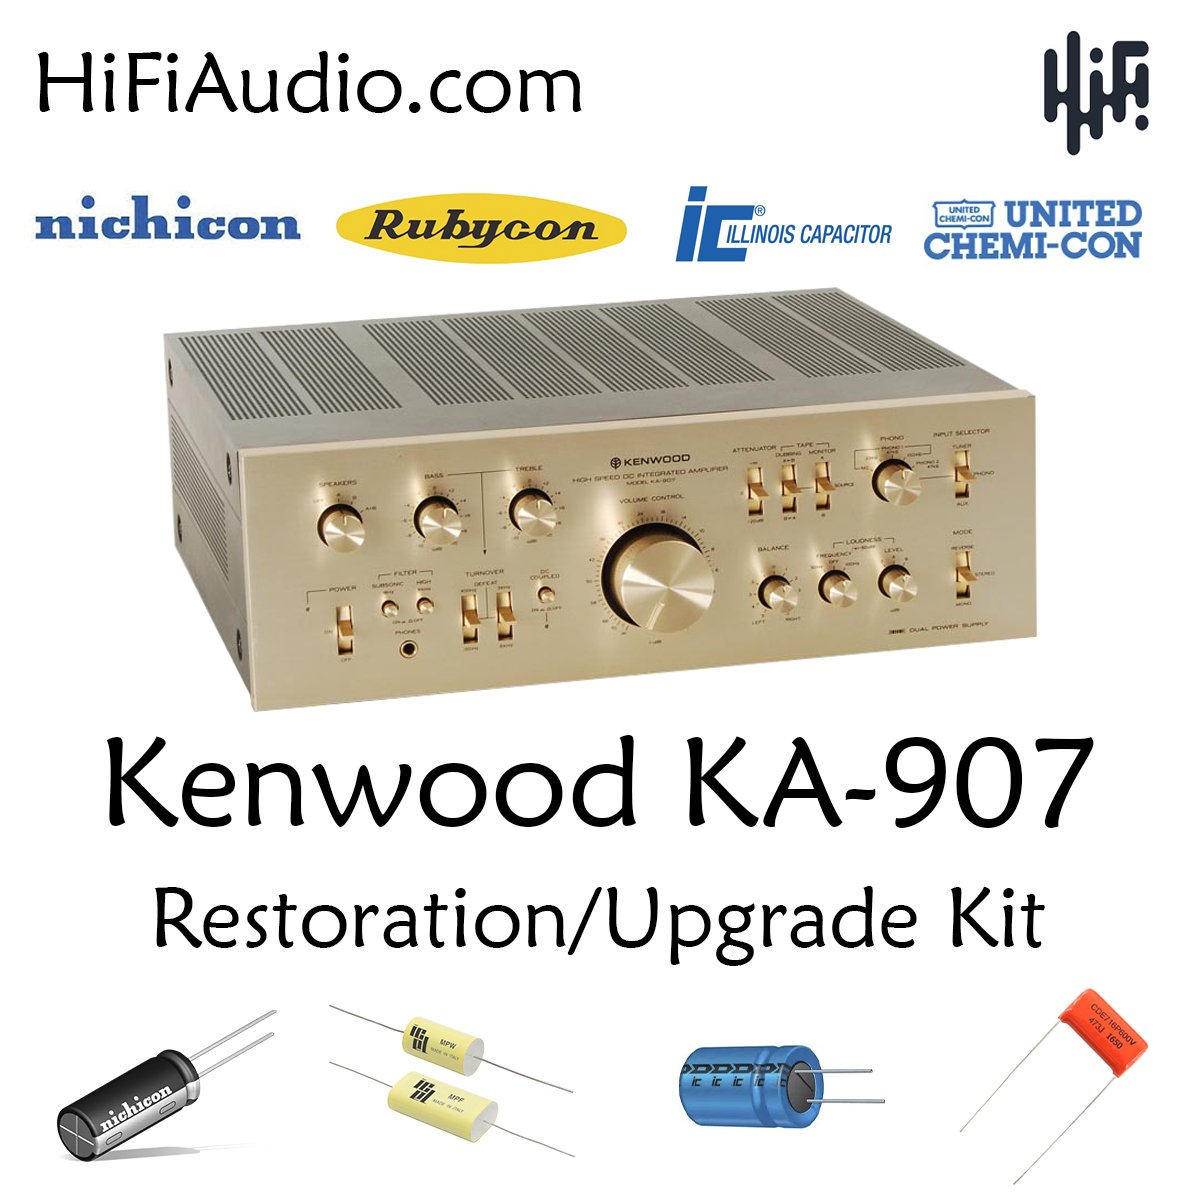 Kenwood KA-907 restoration kit